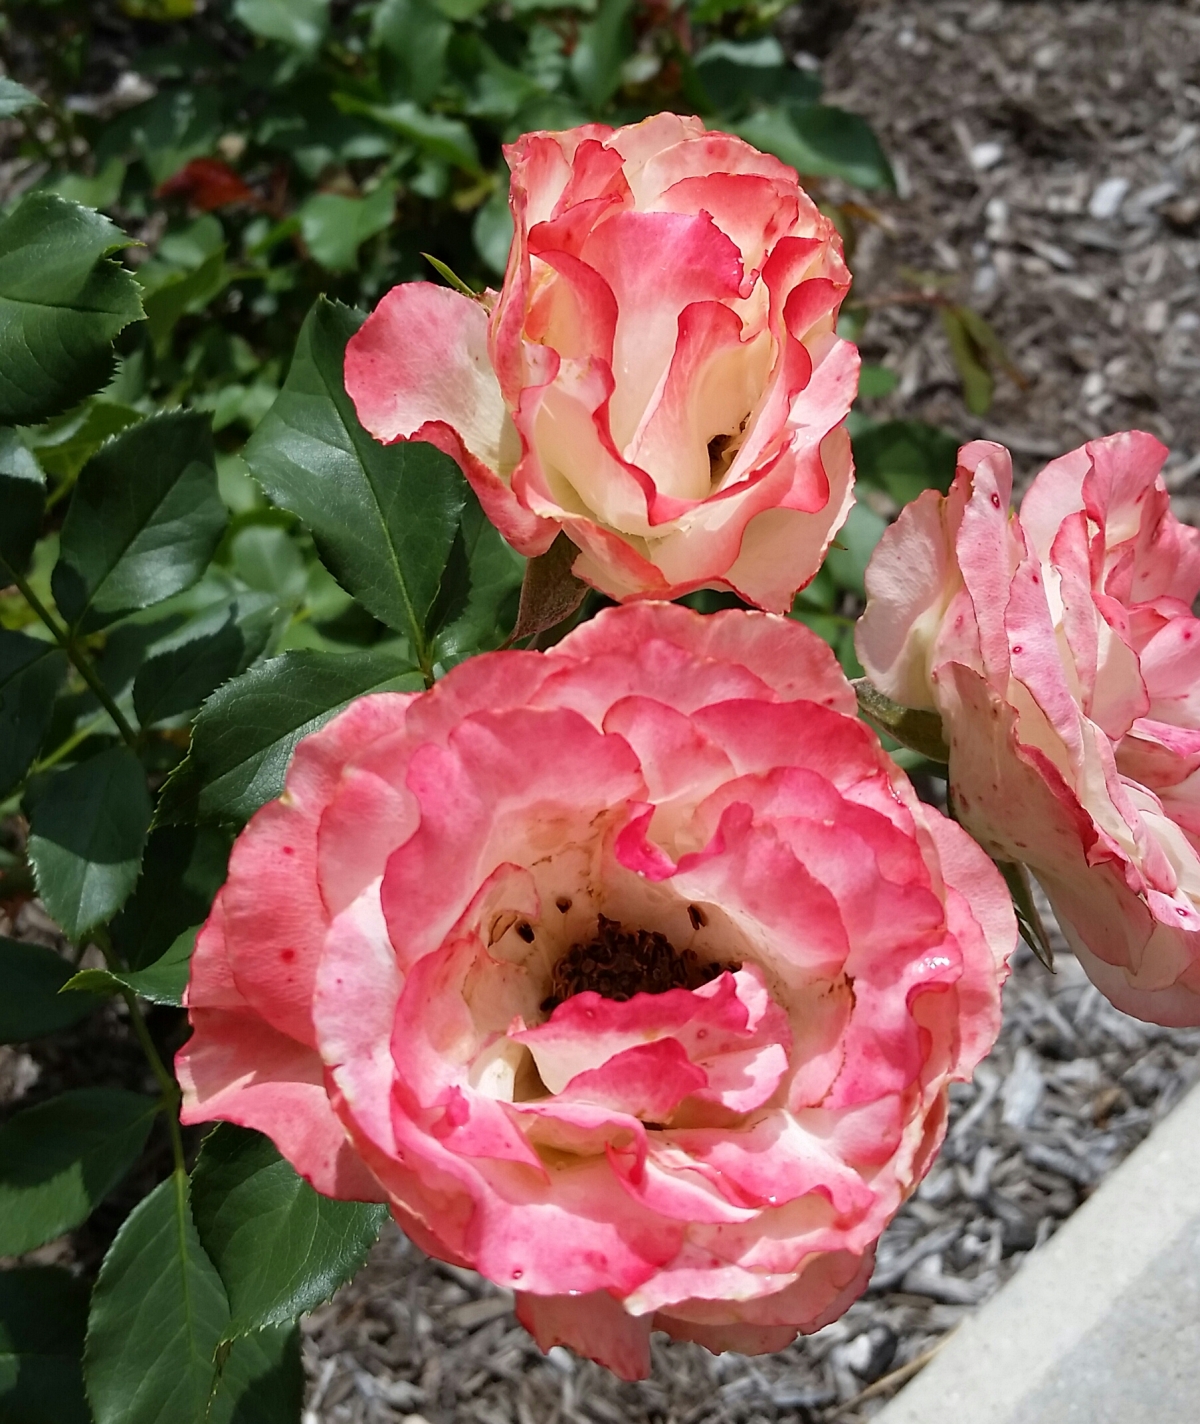 A Visit to a Rose Garden Last Summer